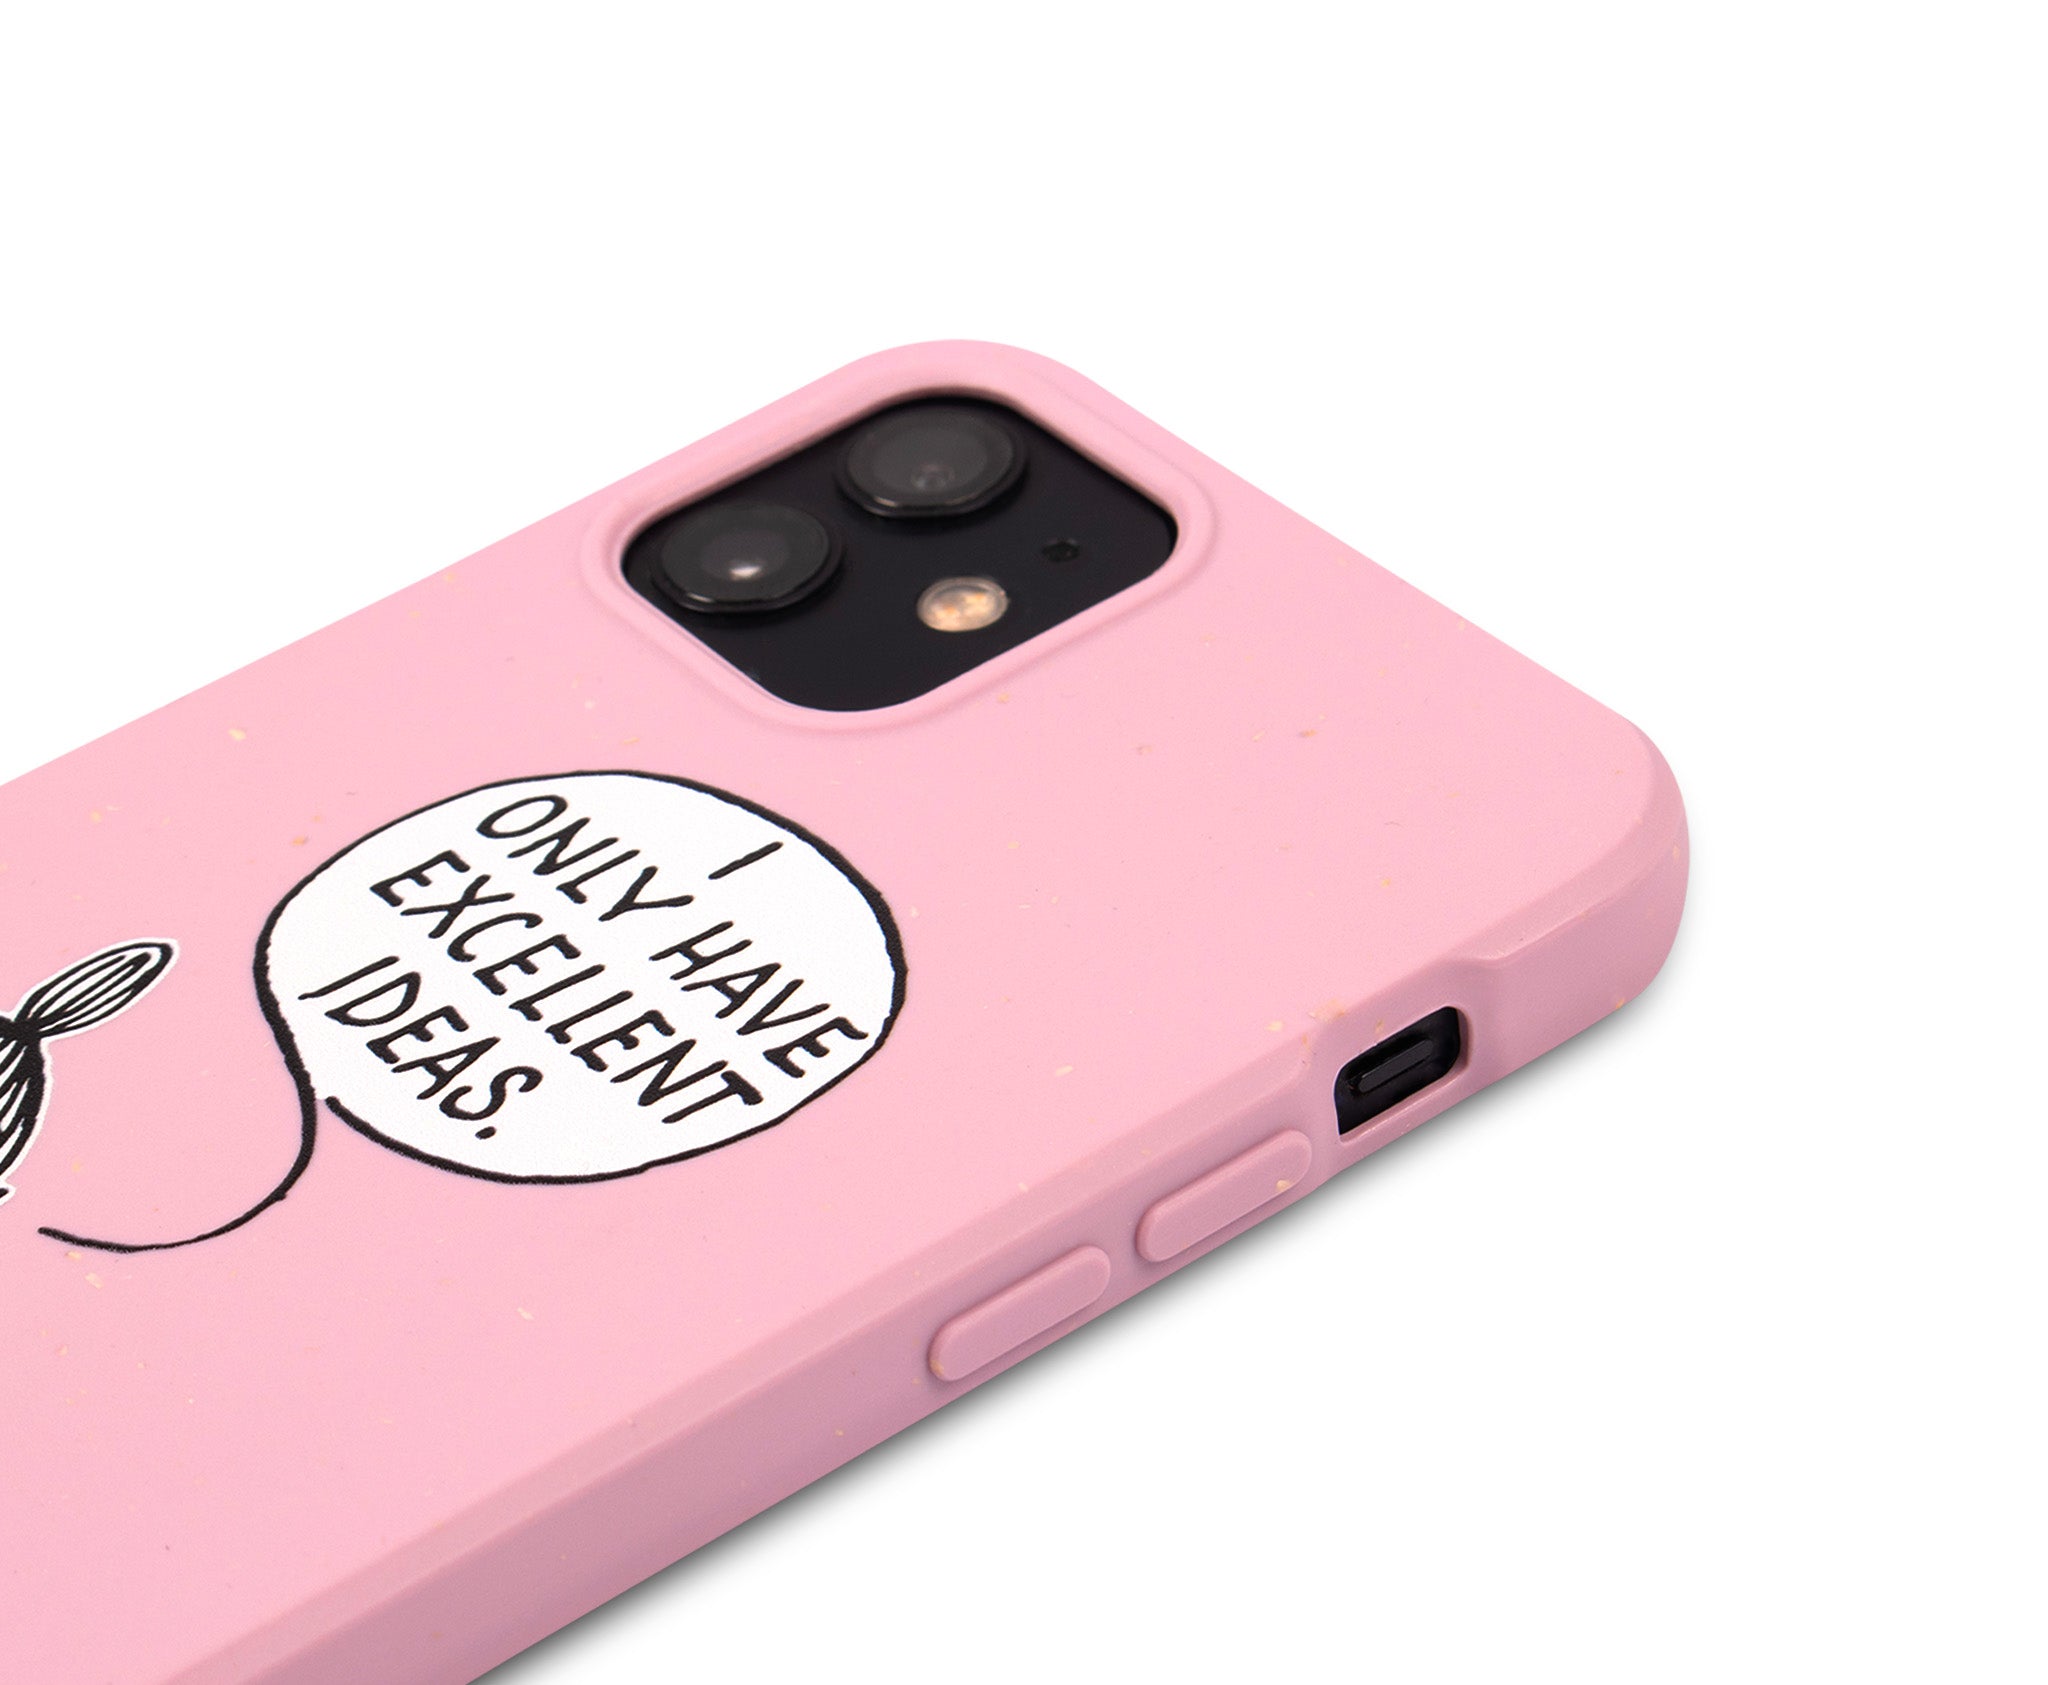 Little My's Idea iPhone Case Biodegradeable - Pink